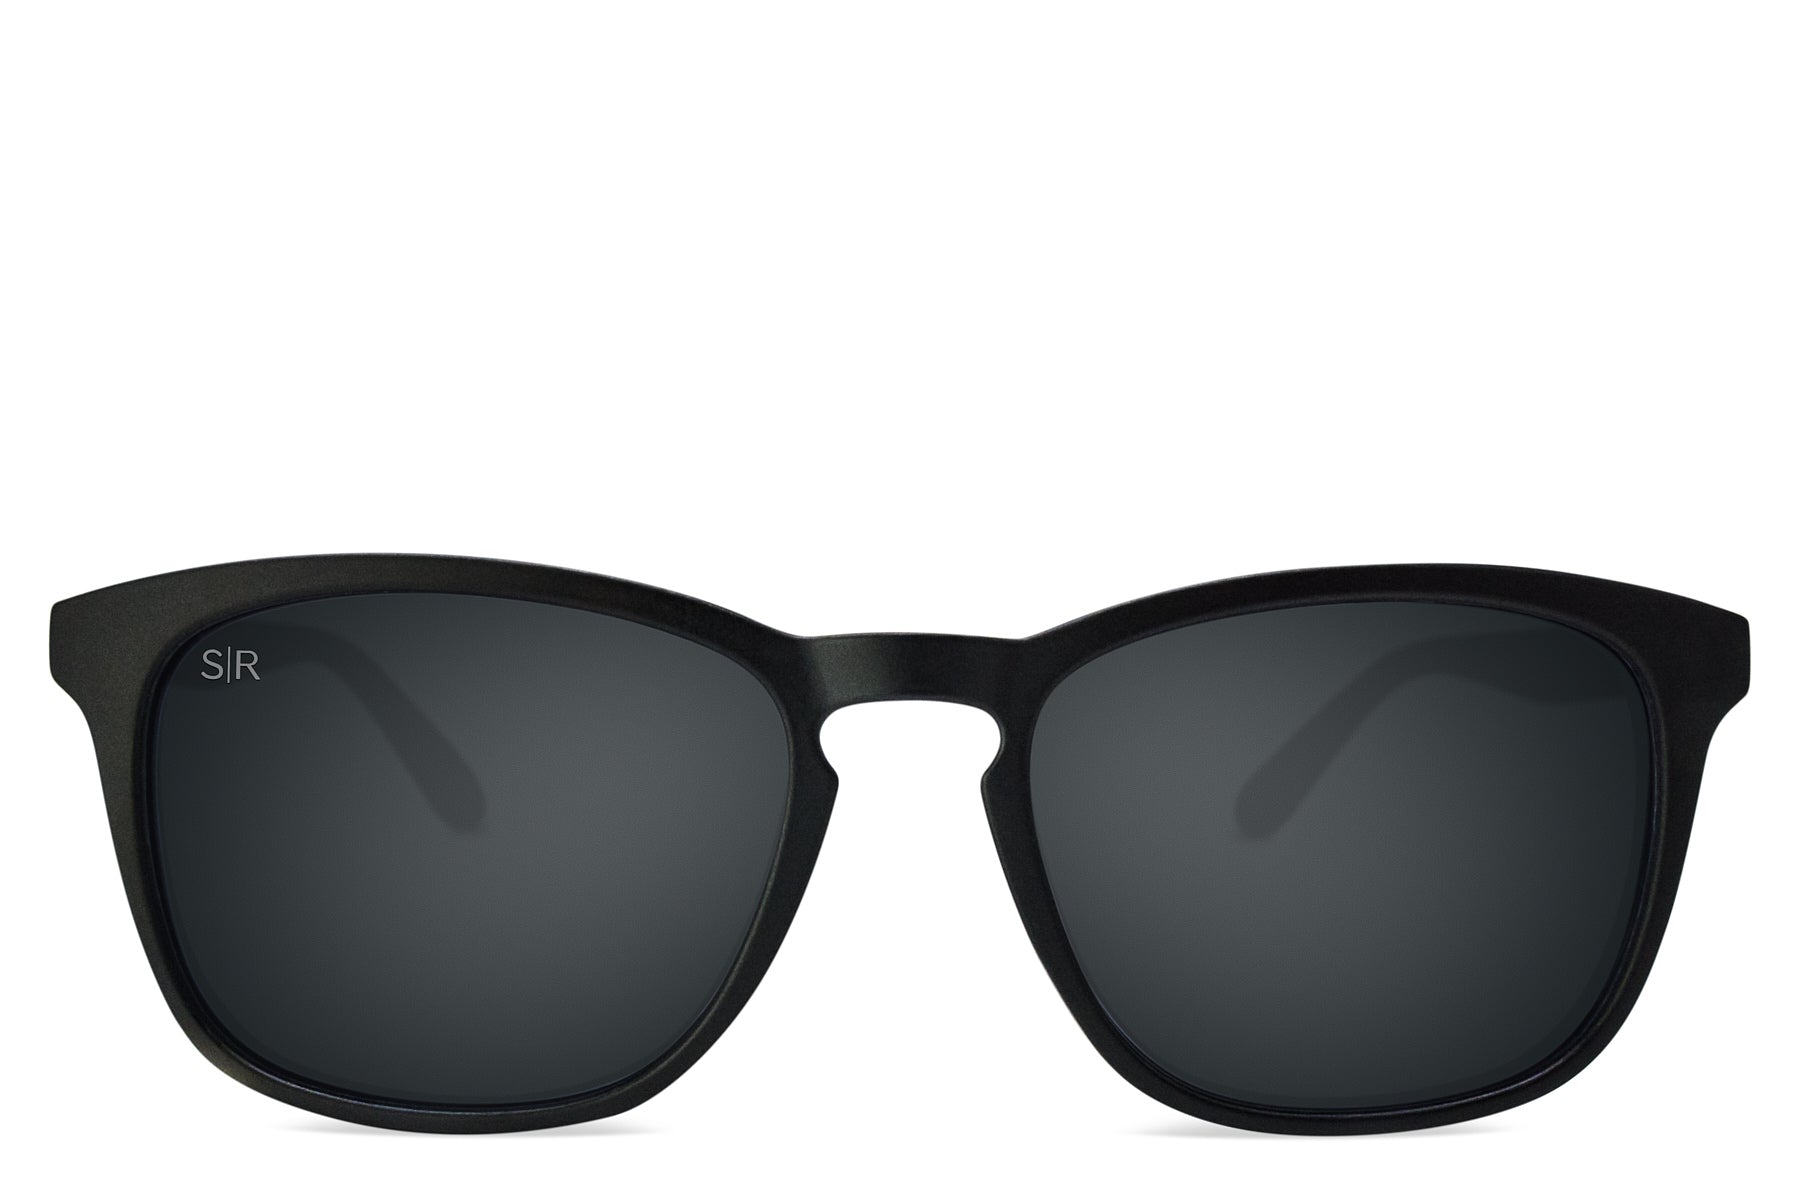 Shady Rays Sunglasses Ventura Limited, Black, Tortoise, Polarized